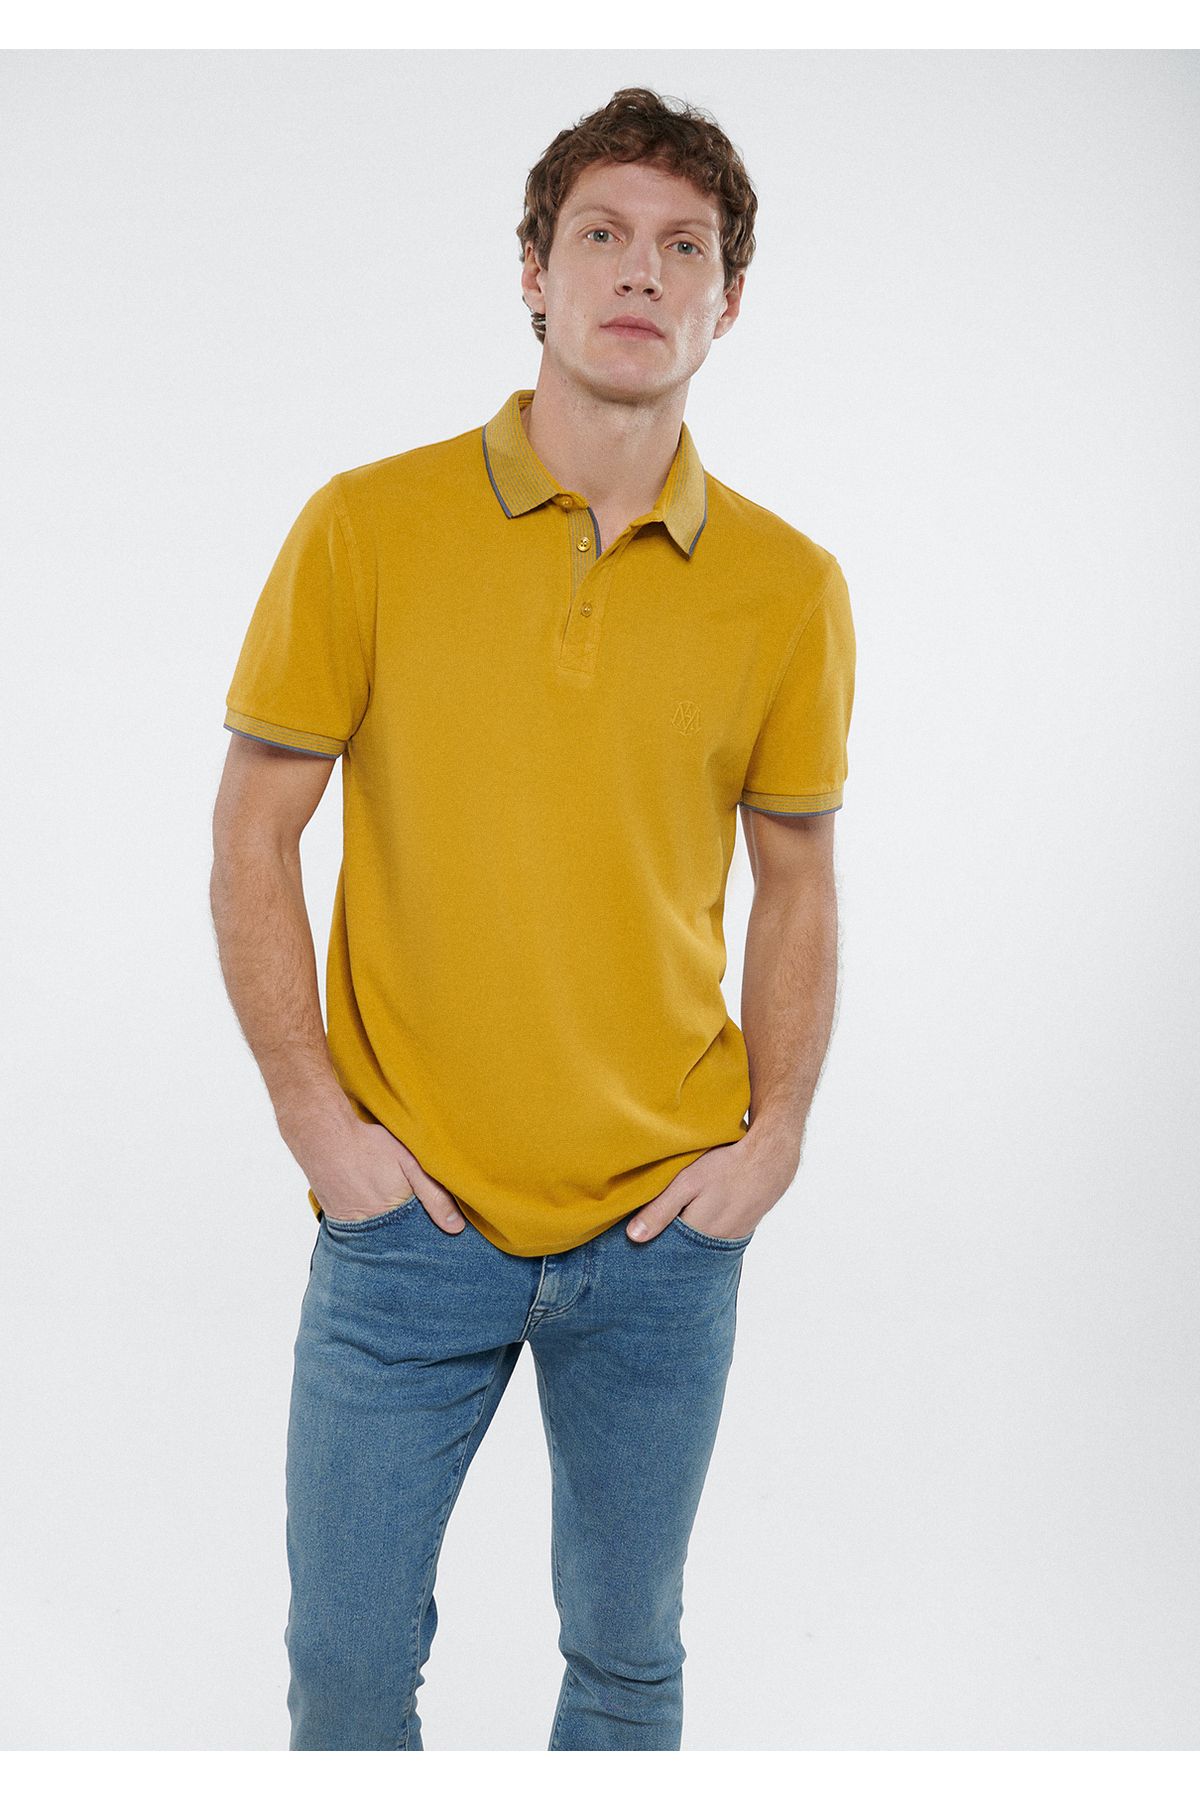 Mavi Renkli Şerit Detaylı Sarı Polo Tişört Slim Fit / Dar Kesim 065920-30719